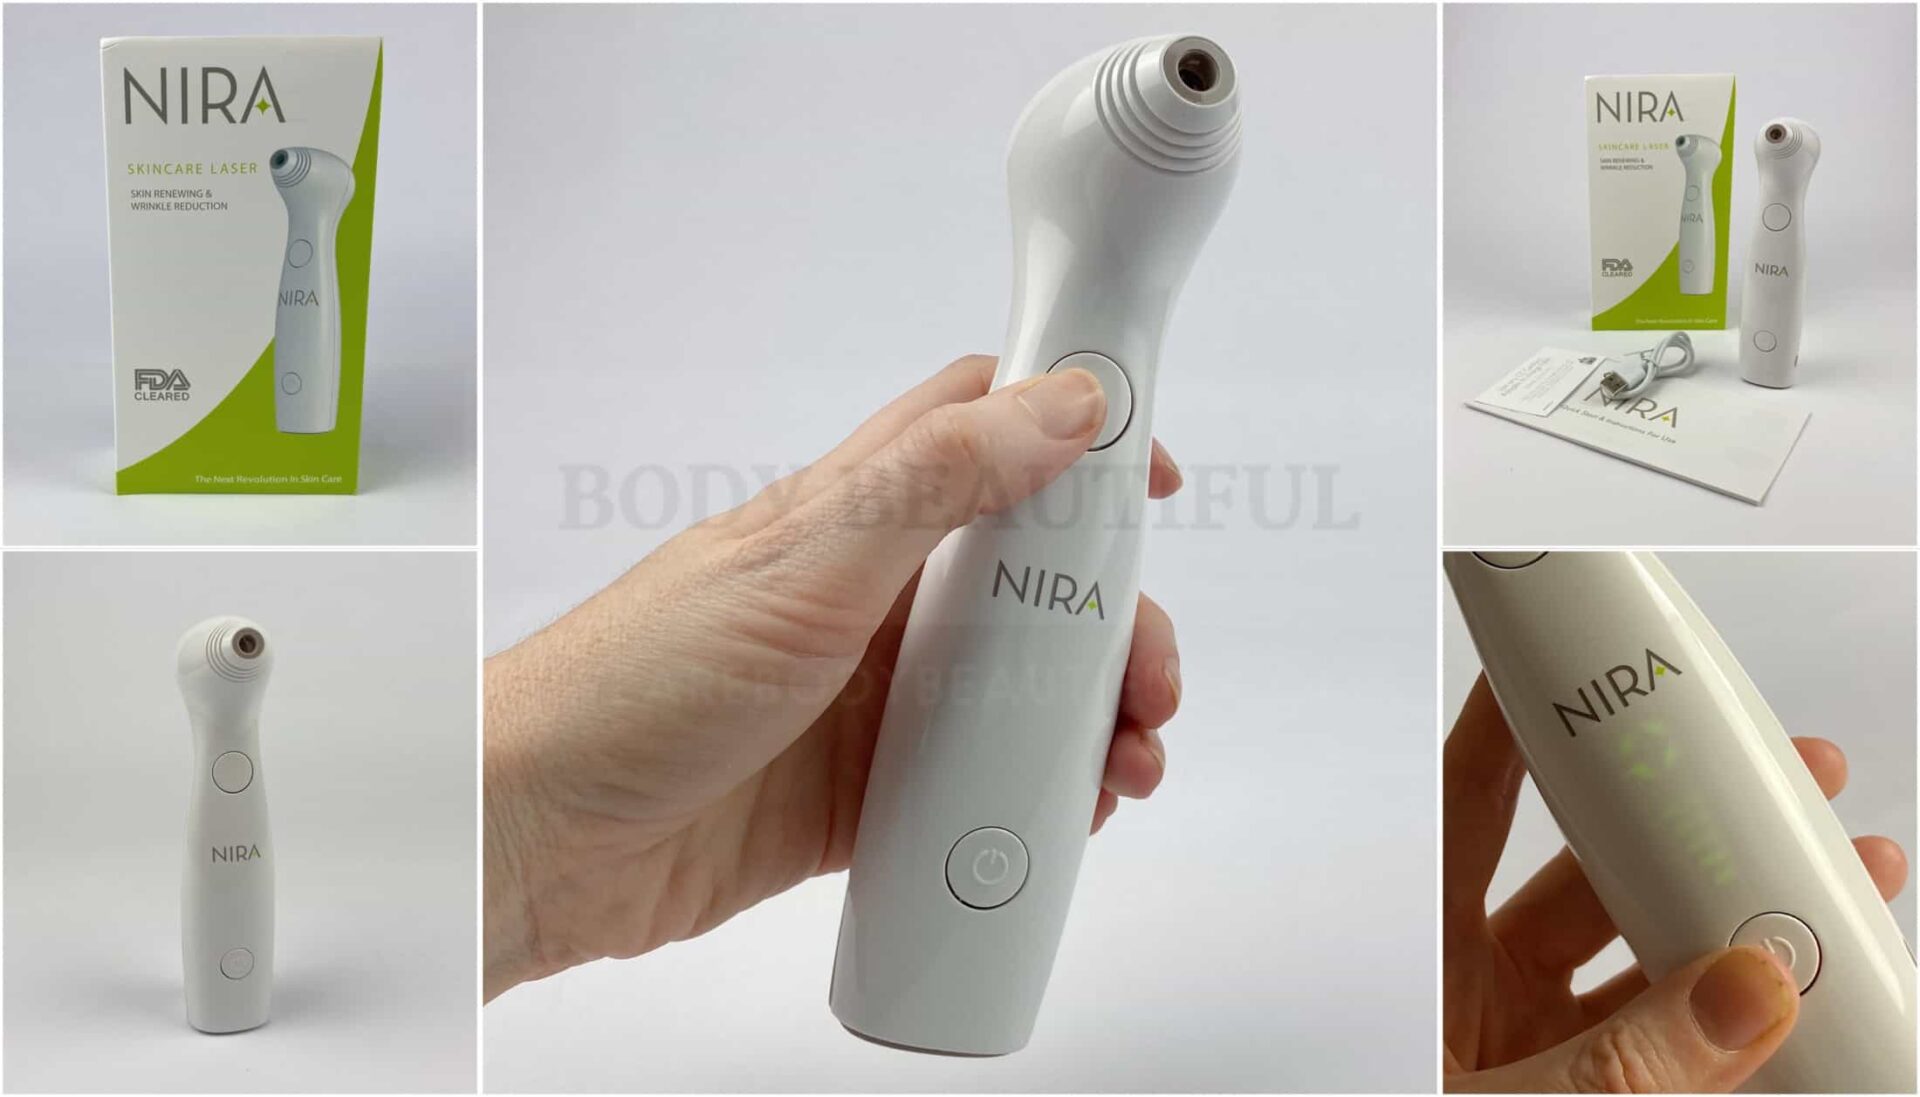 NIRA Skincare Laser review